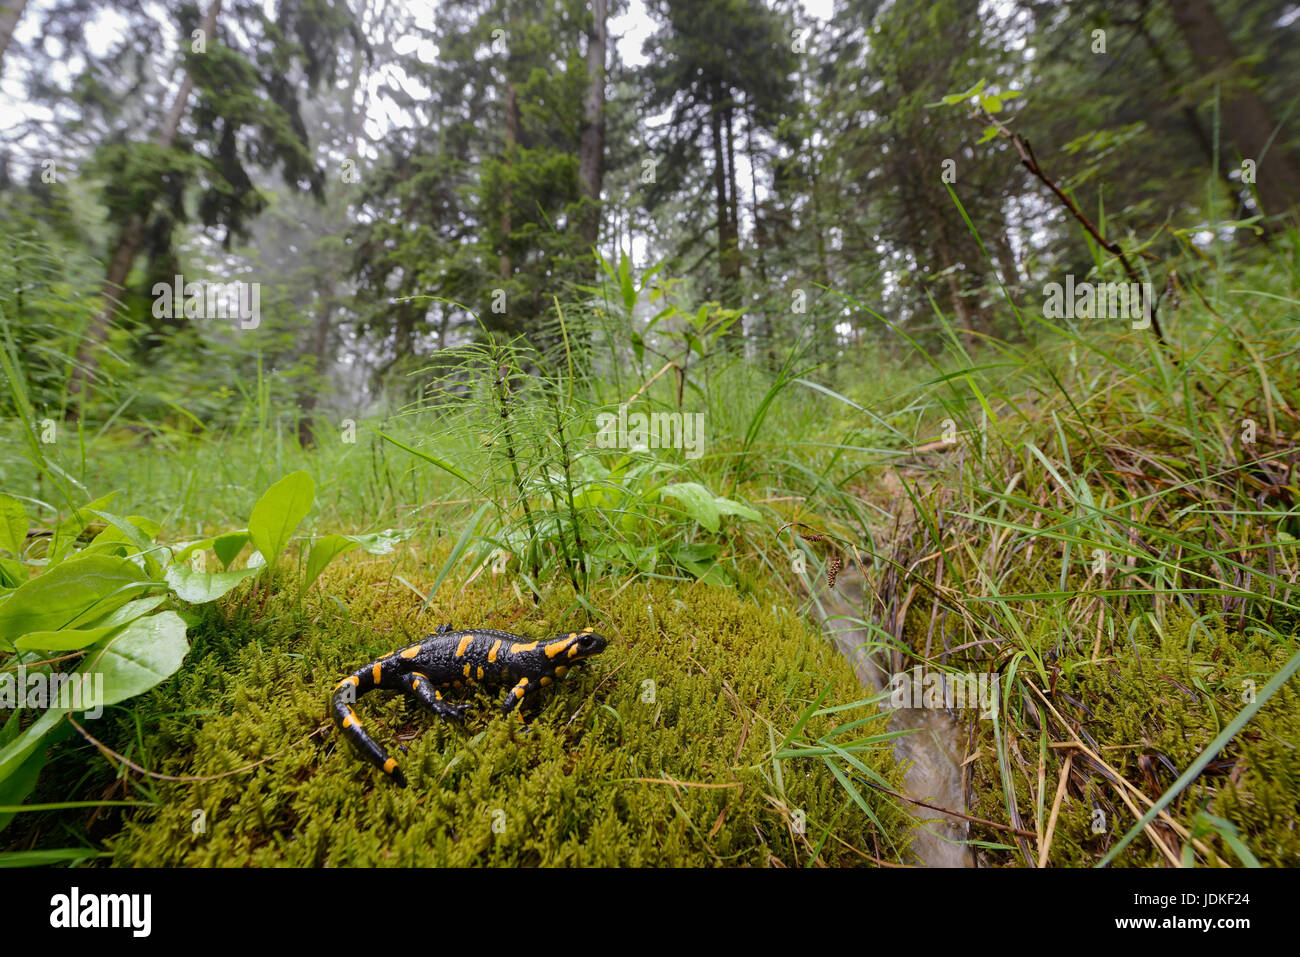 Salamandra pezzata siede su moss in legno, Feuersalamander sitzt auf Moos im Wald Foto Stock